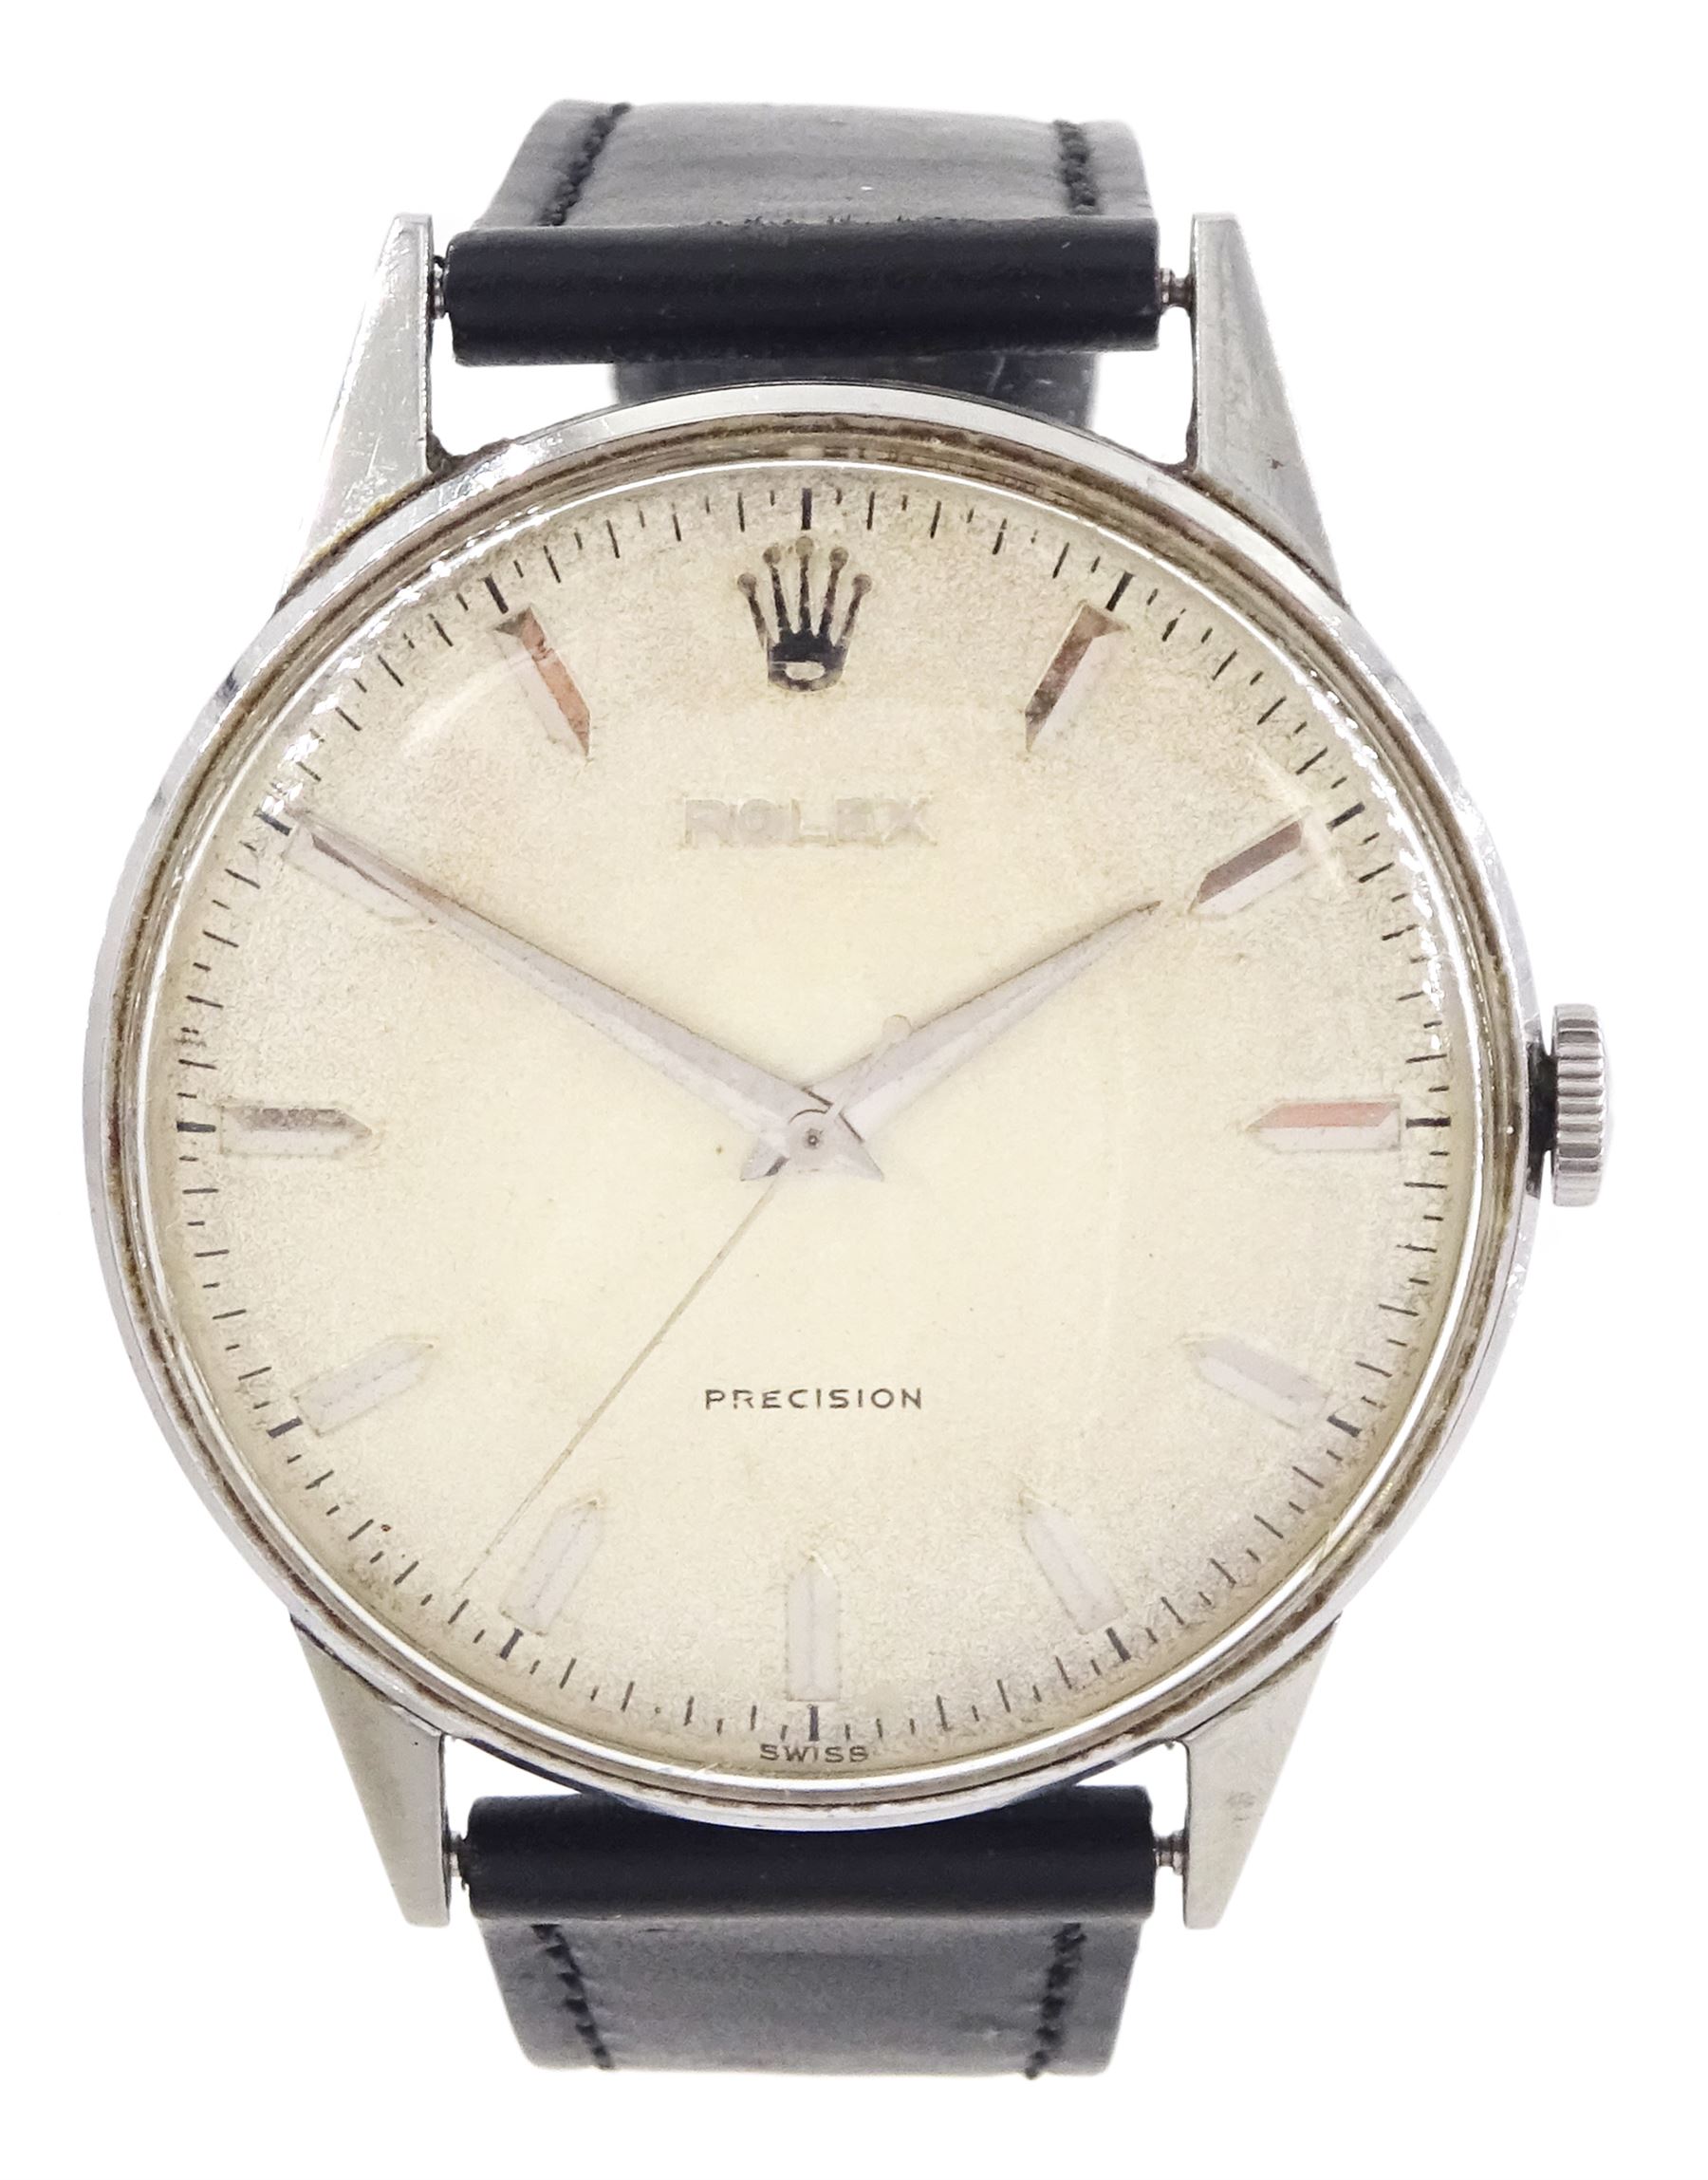 Rolex Precision gentleman's stainless steel manual wind wristwatch